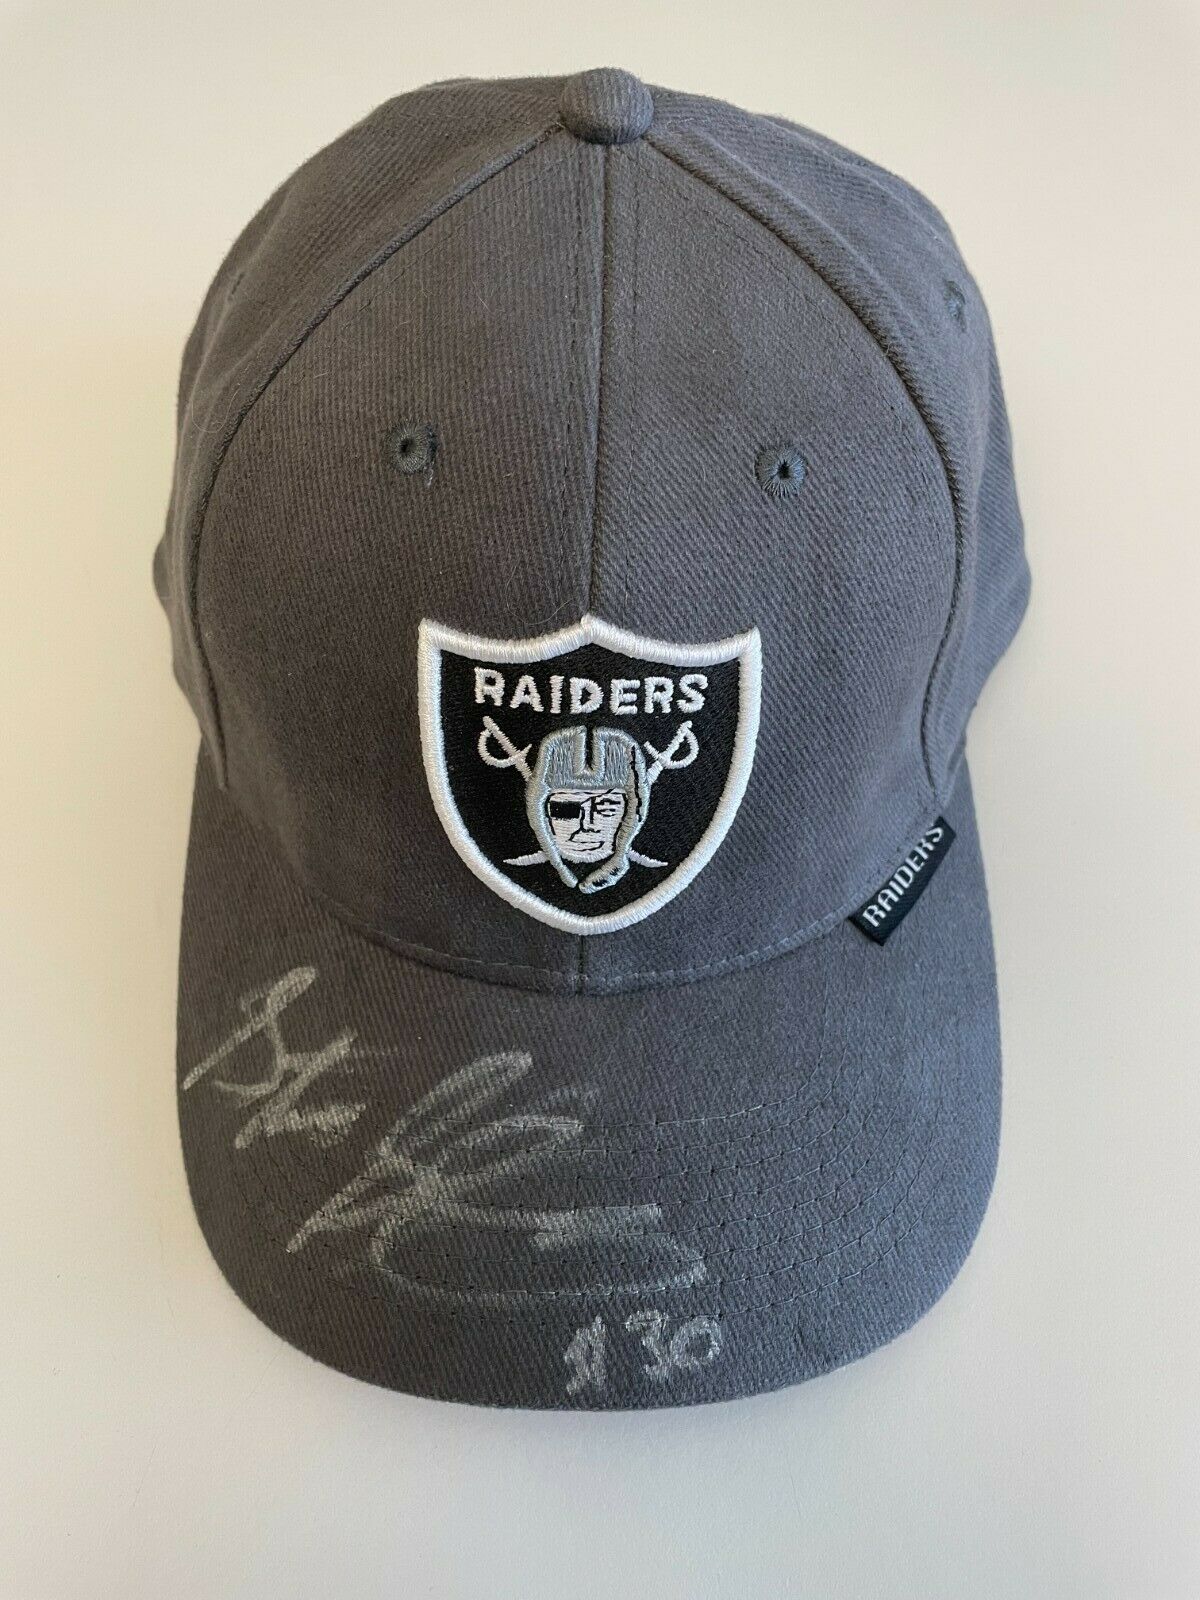 Stuart Schweigert Nfl Oakland Raiders #30 Safety Autographed Gameday Hat